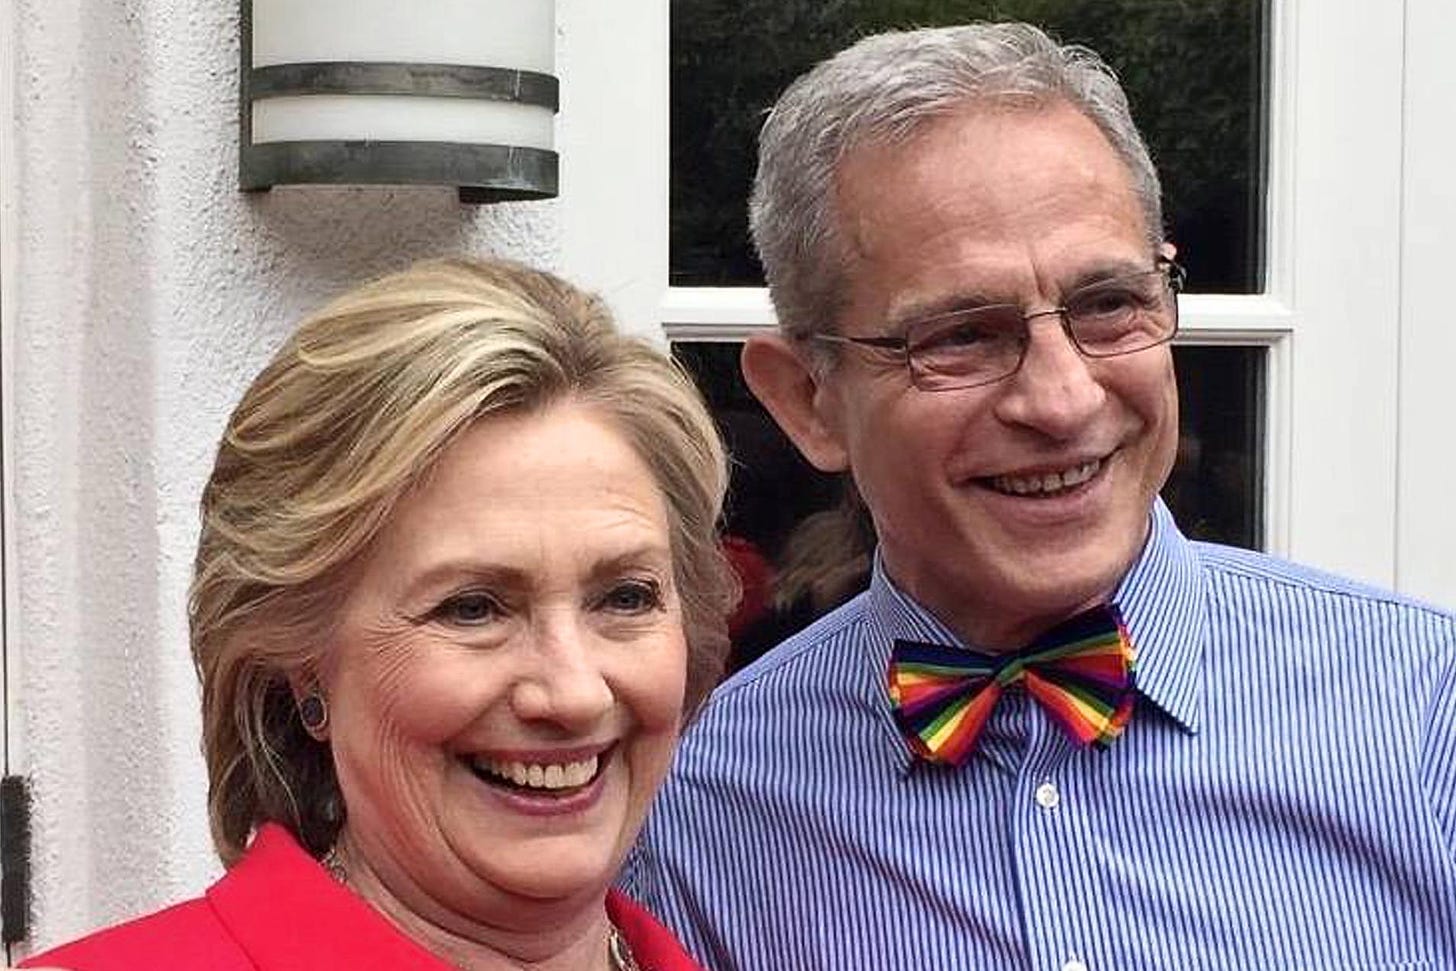 Hillary Clinton with democratic donor Ed Buck